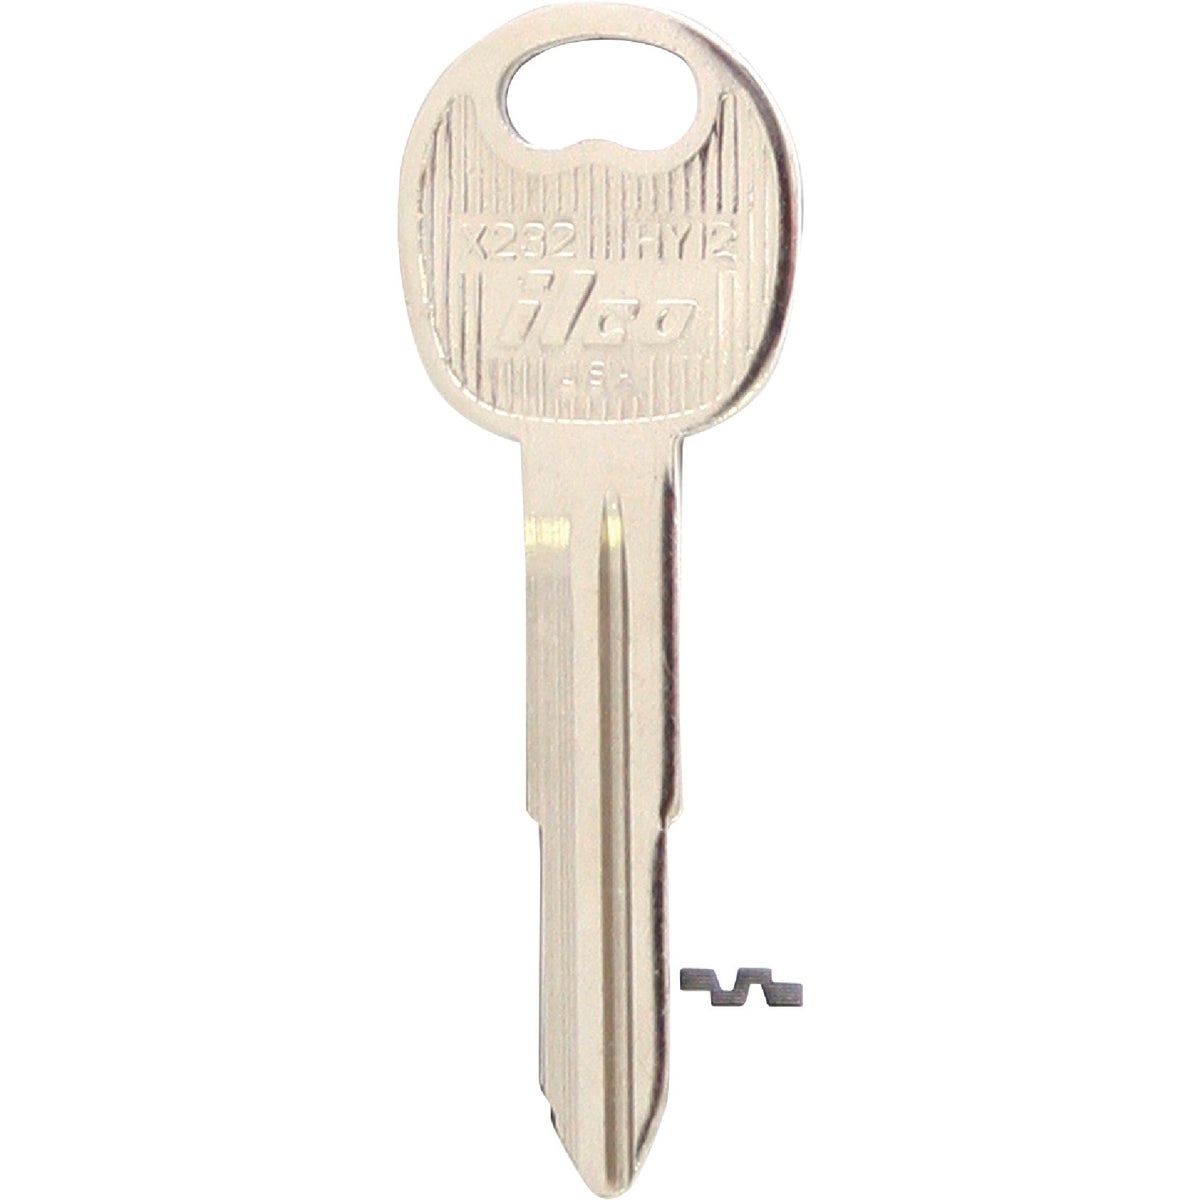 ILCO Hyundai Nickel Plated Automotive Key, HY12 / X232 (10-Pack)